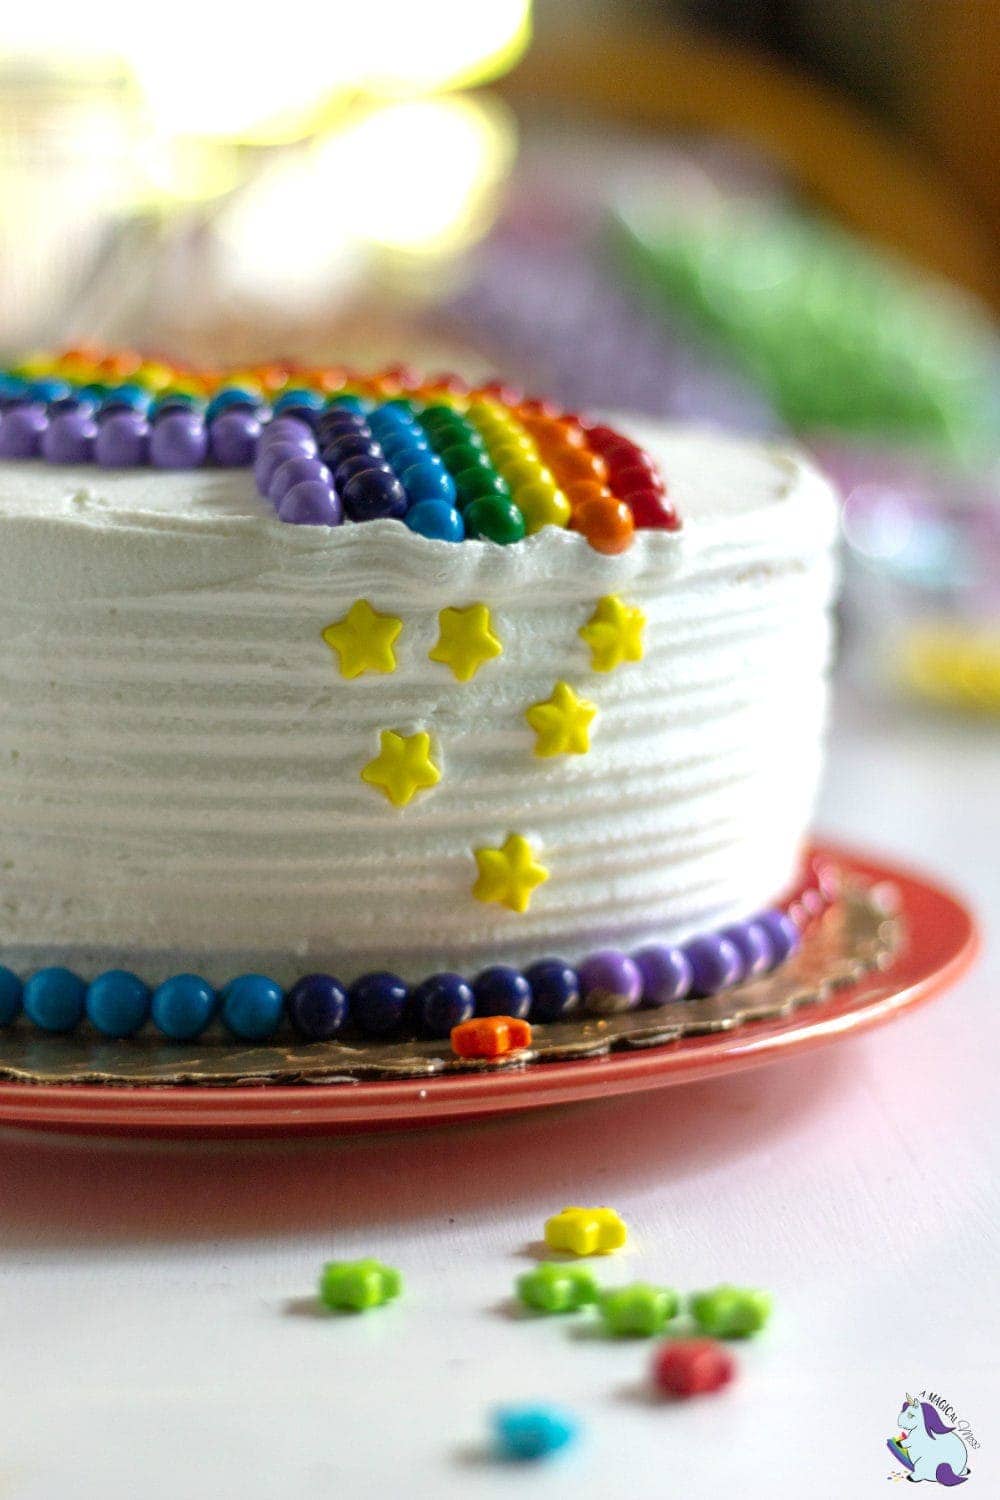 Easy Cake Decorating Hack - Make a Plain Cake look Magical ...